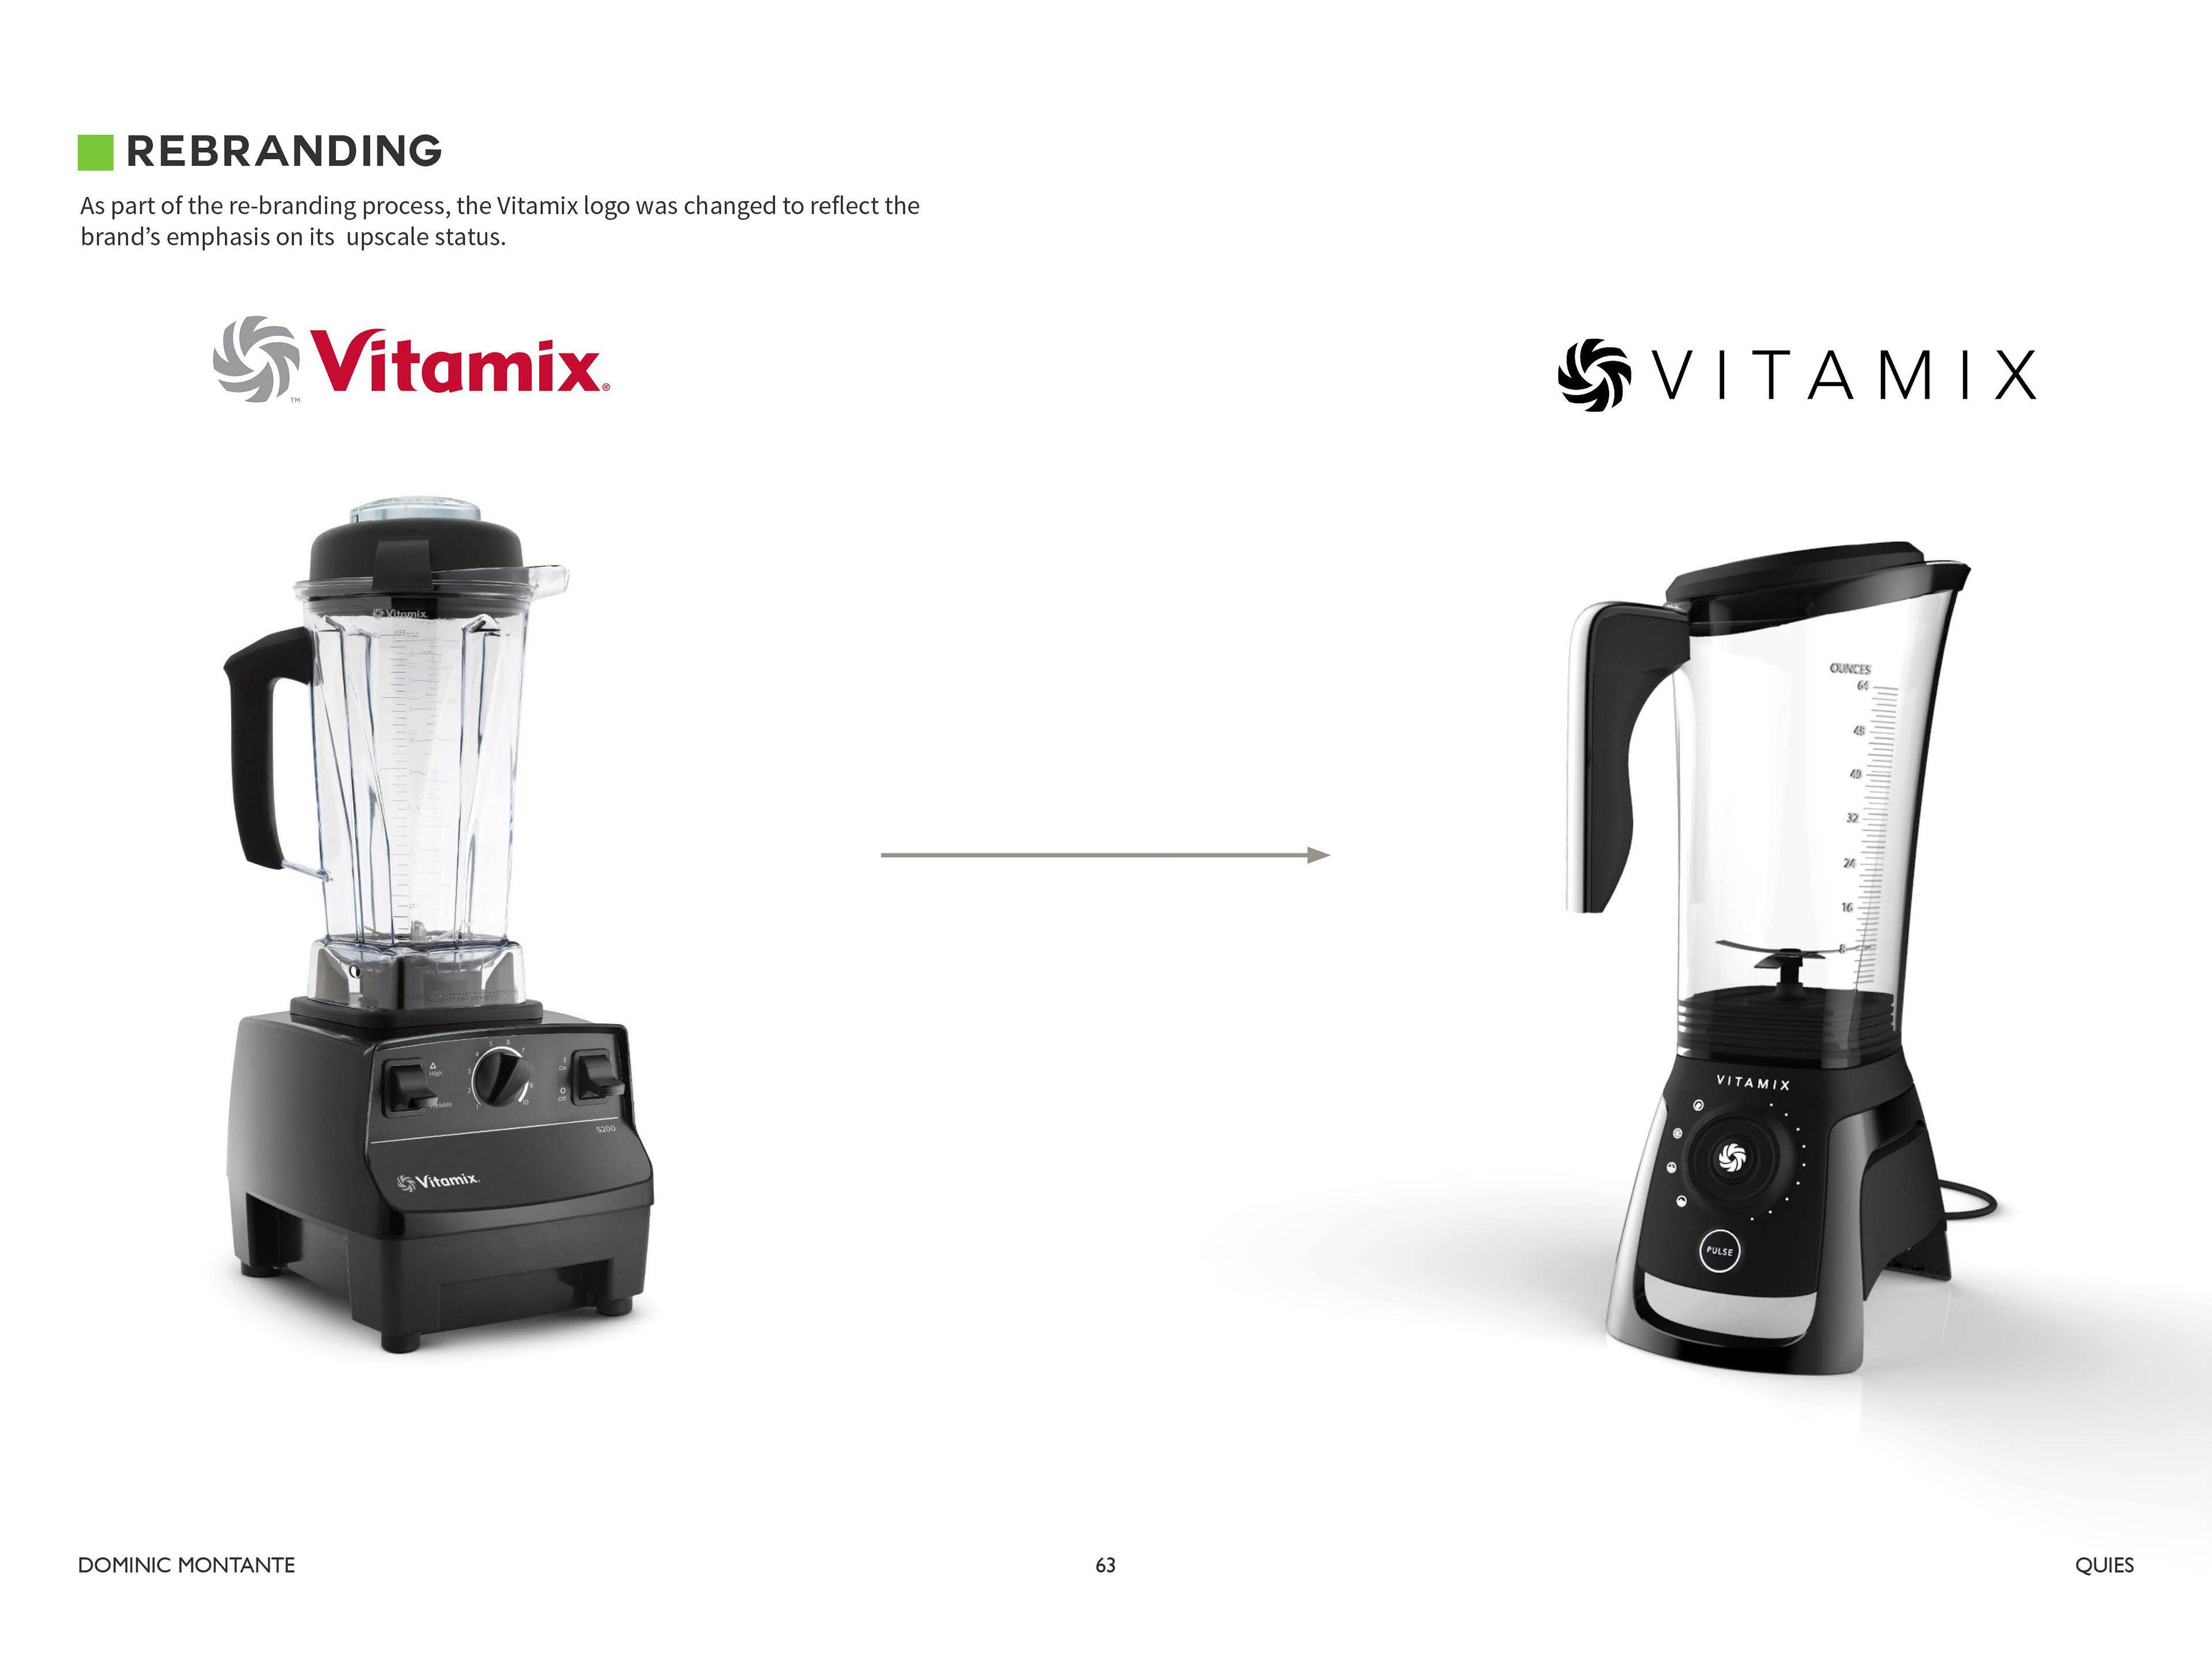 Vitamix Logo - Dominic Montante - Vitamix 800